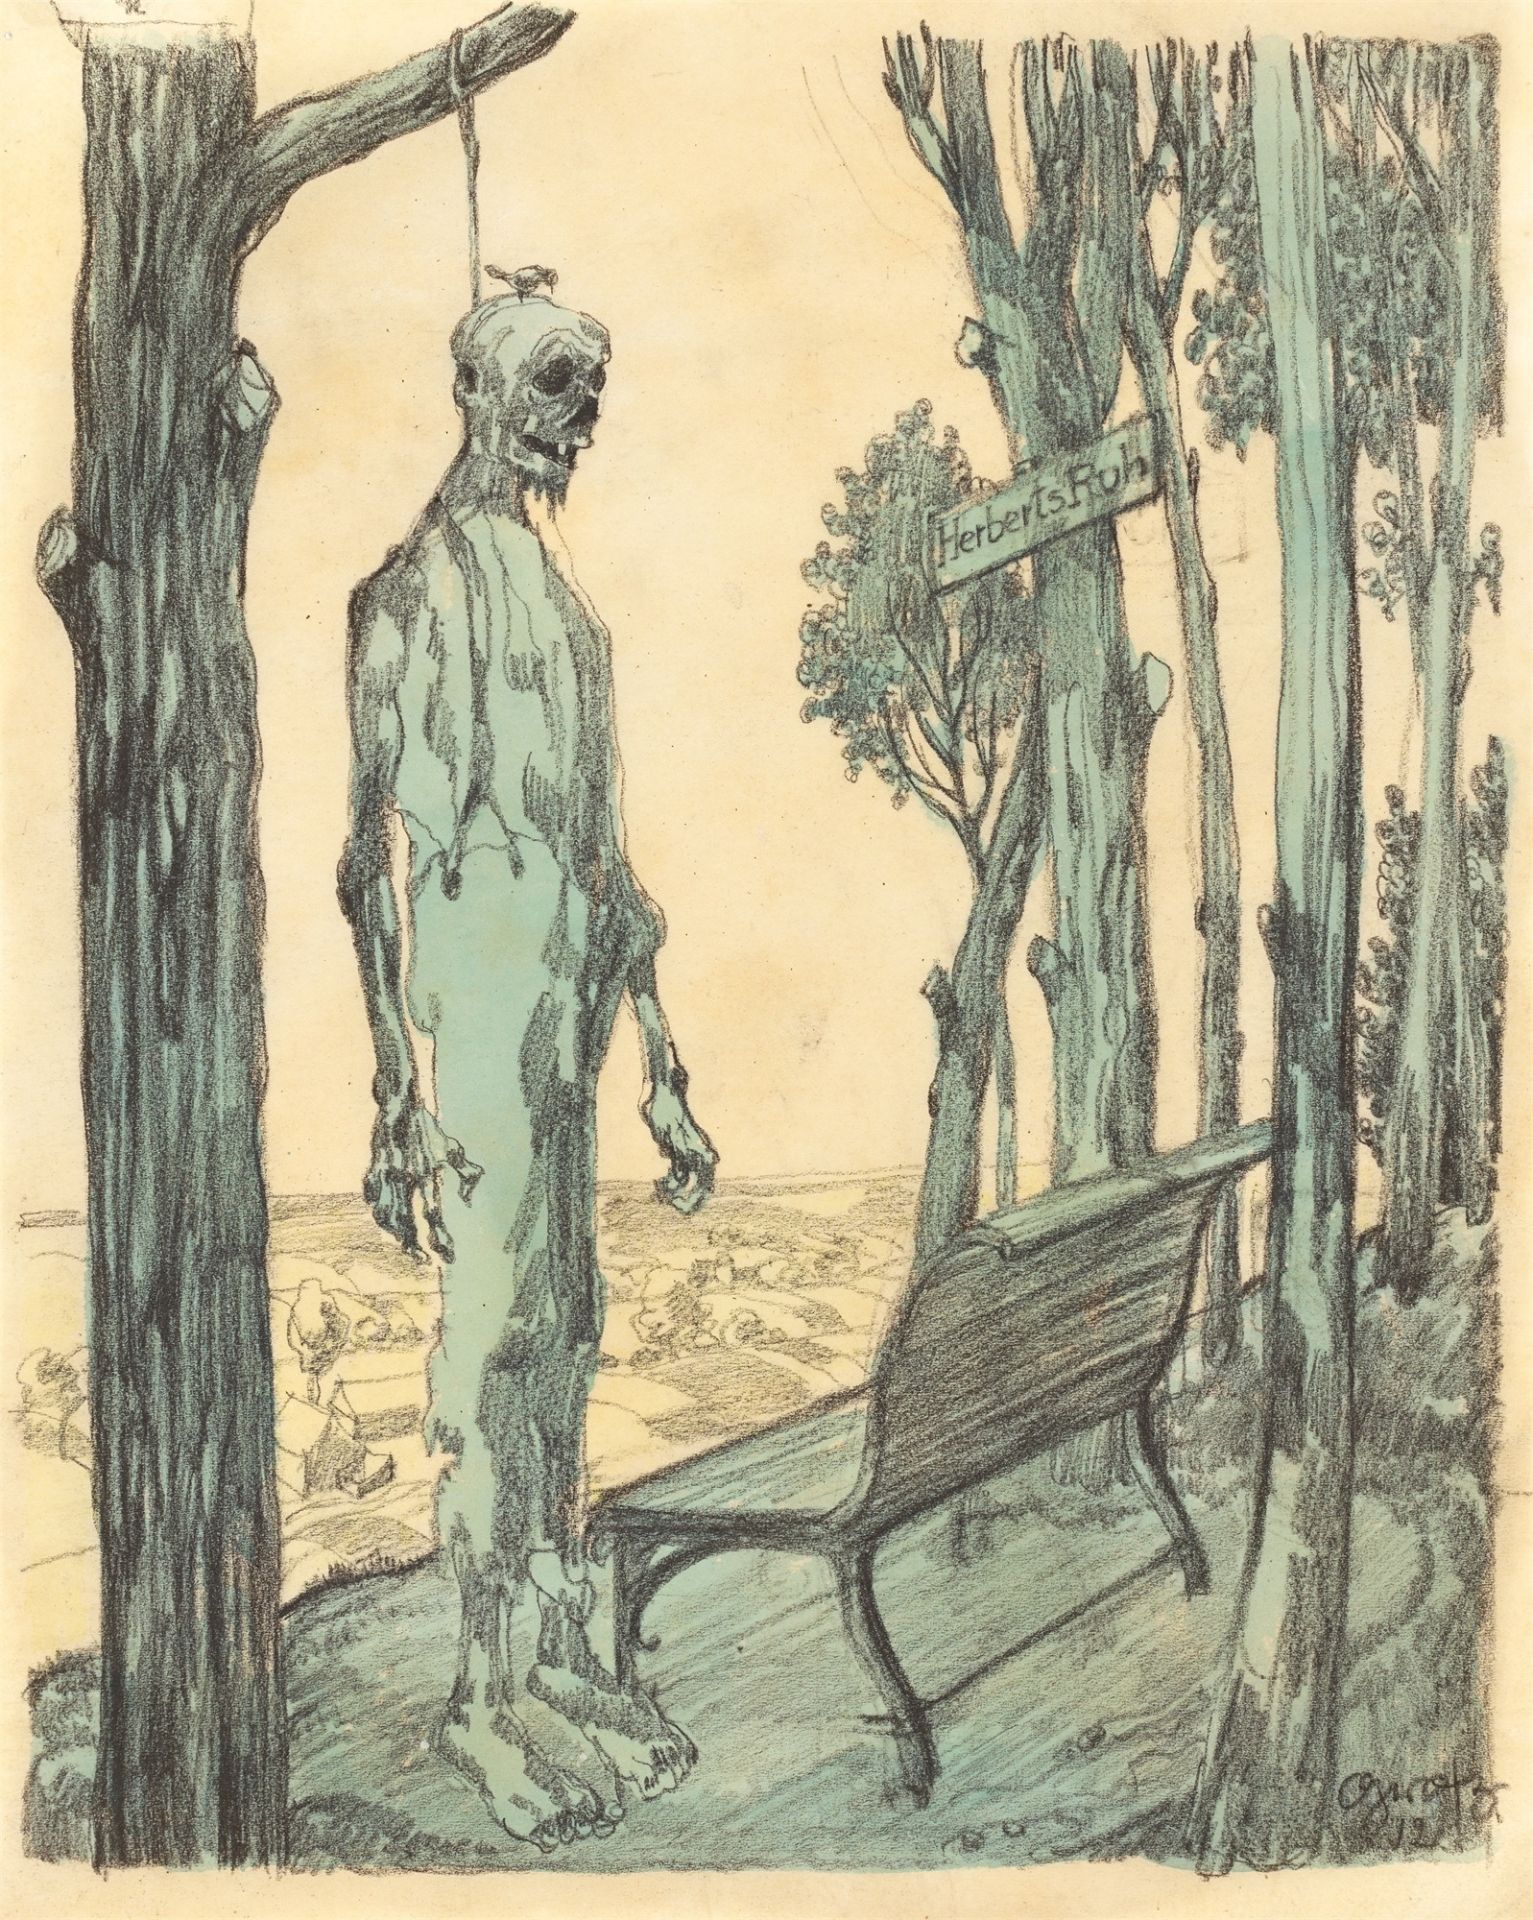 George Grosz. ”Herberts Ruh”. 1912